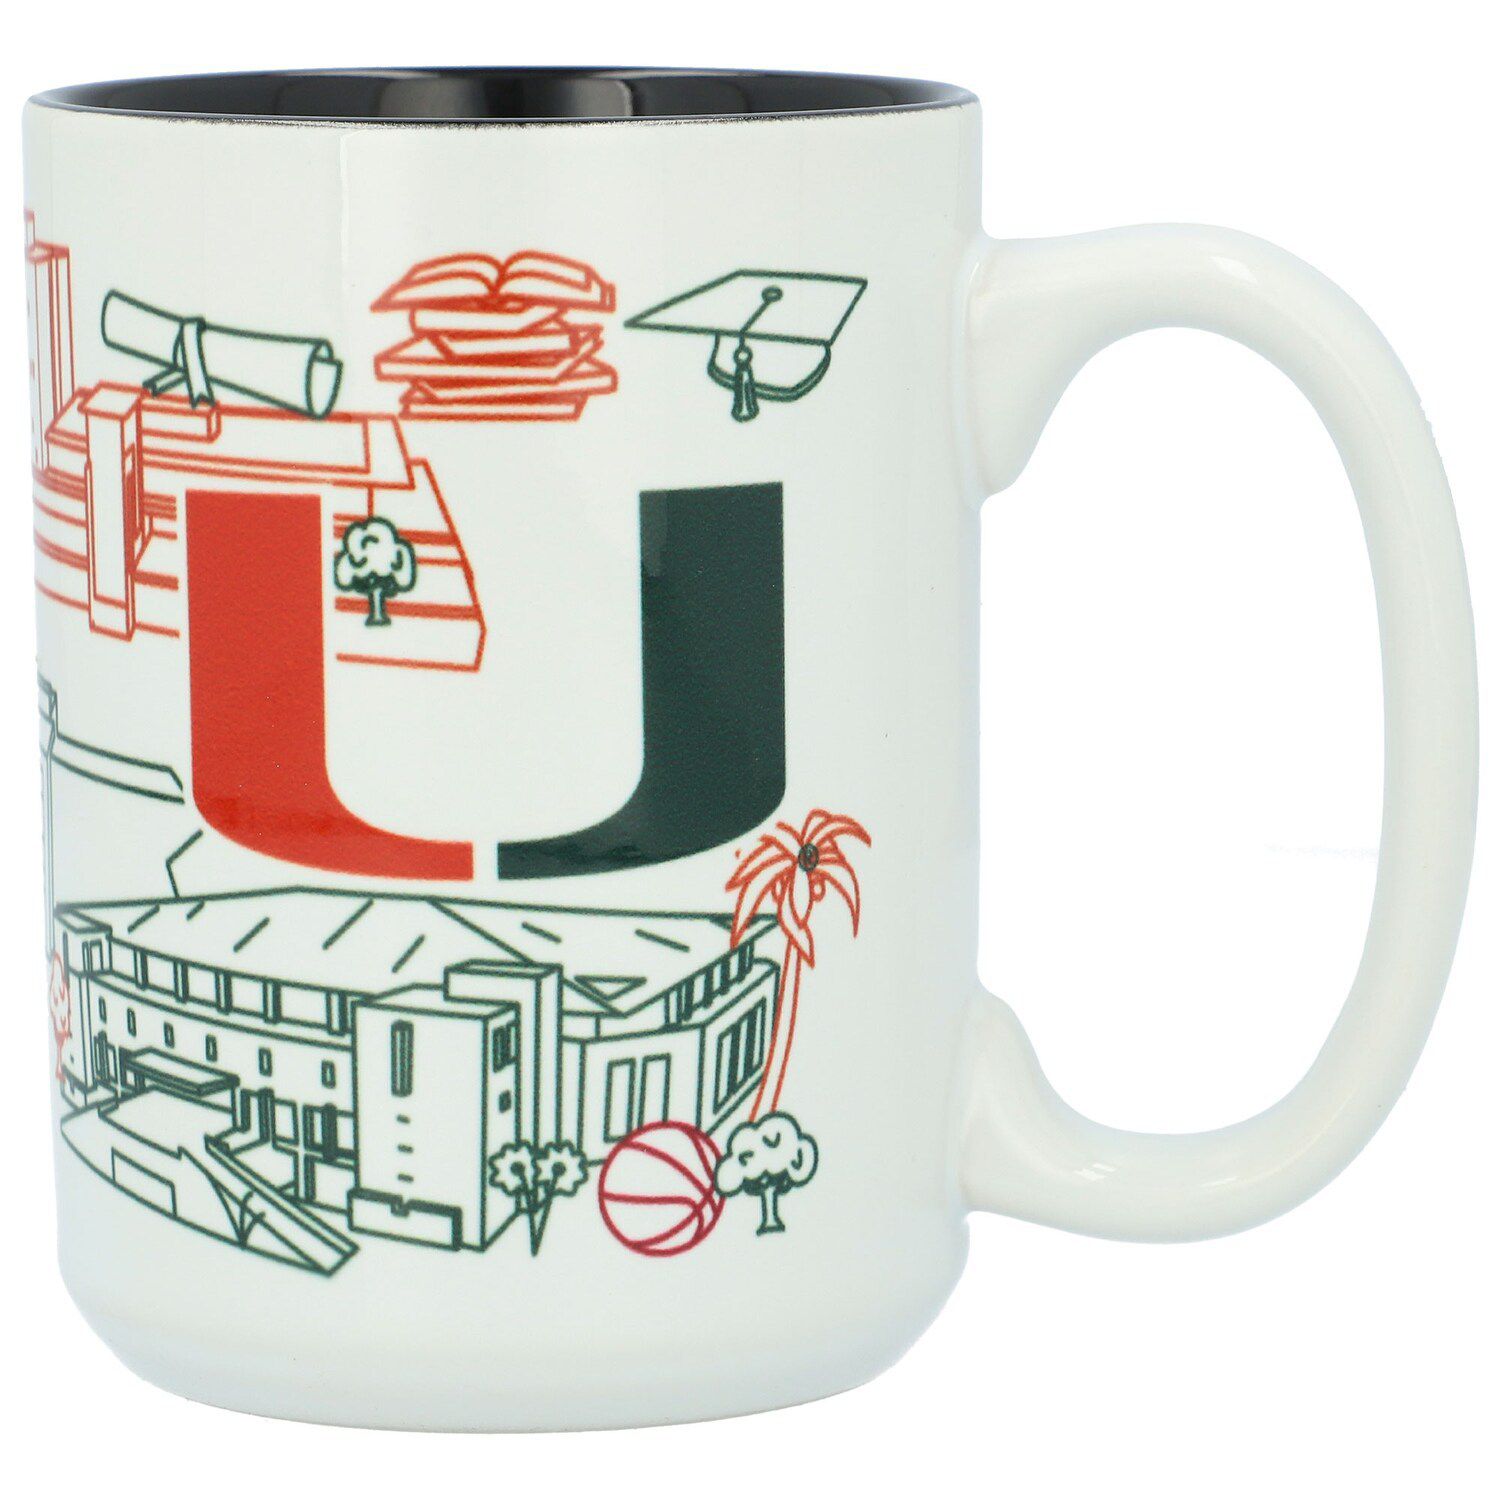 Ohio State Buckeyes 19 oz. STARTER Ceramic Coffee Mug